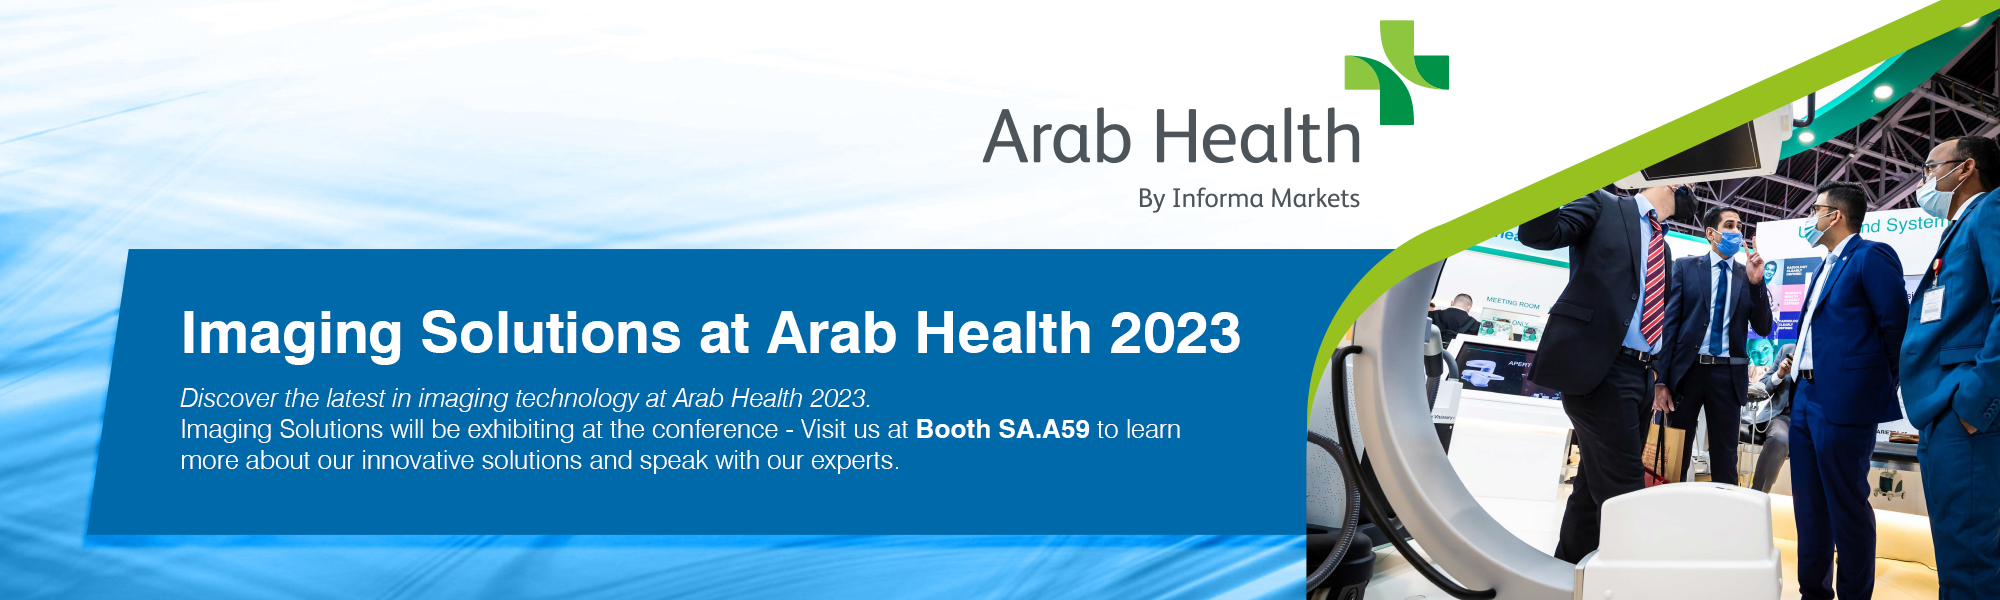 Event: Arab Health 2023